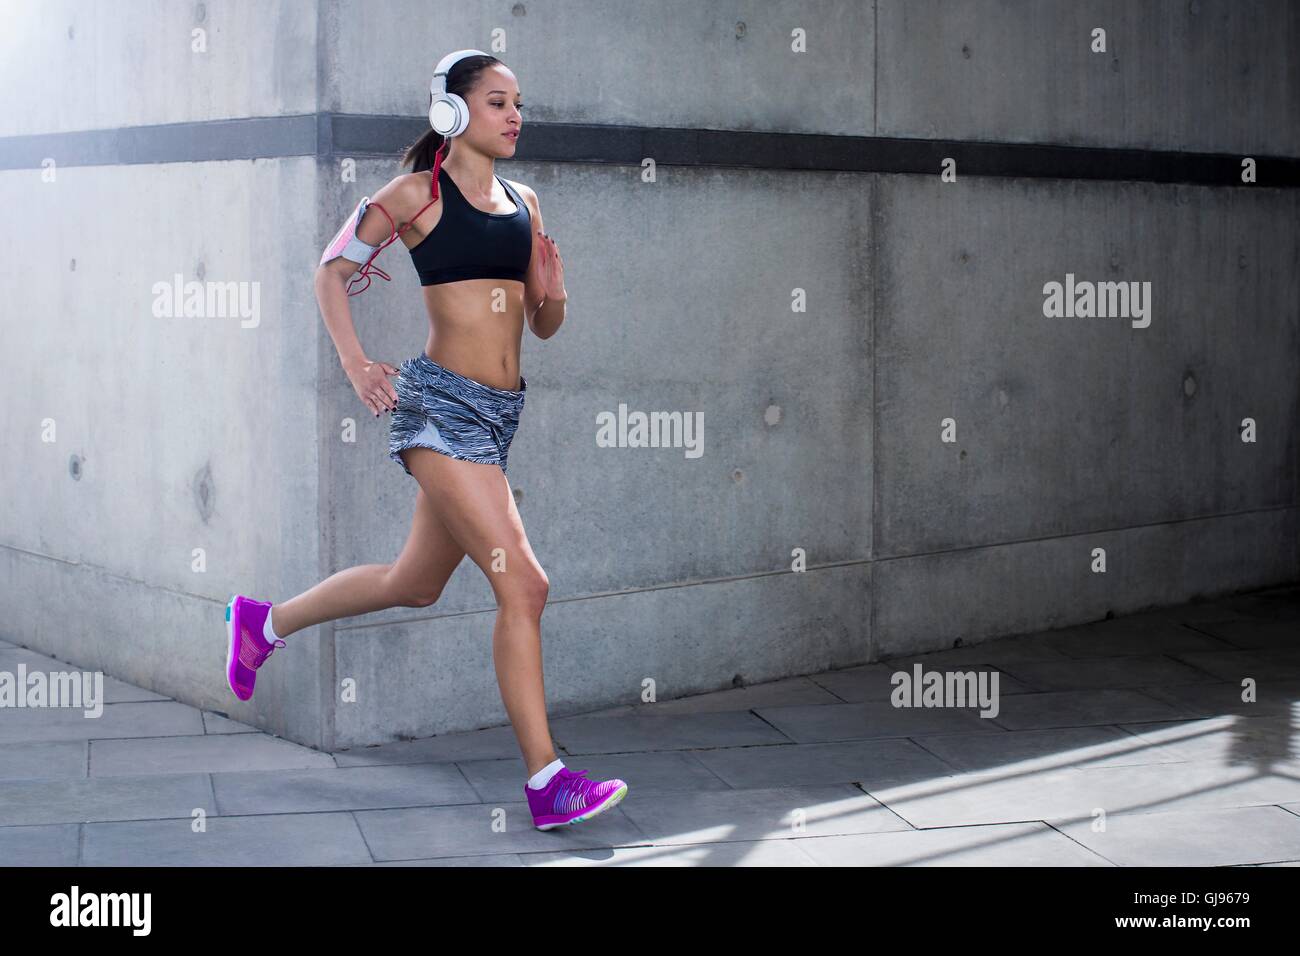 MODEL RELEASED. Young woman wearing headphones running. Stock Photo